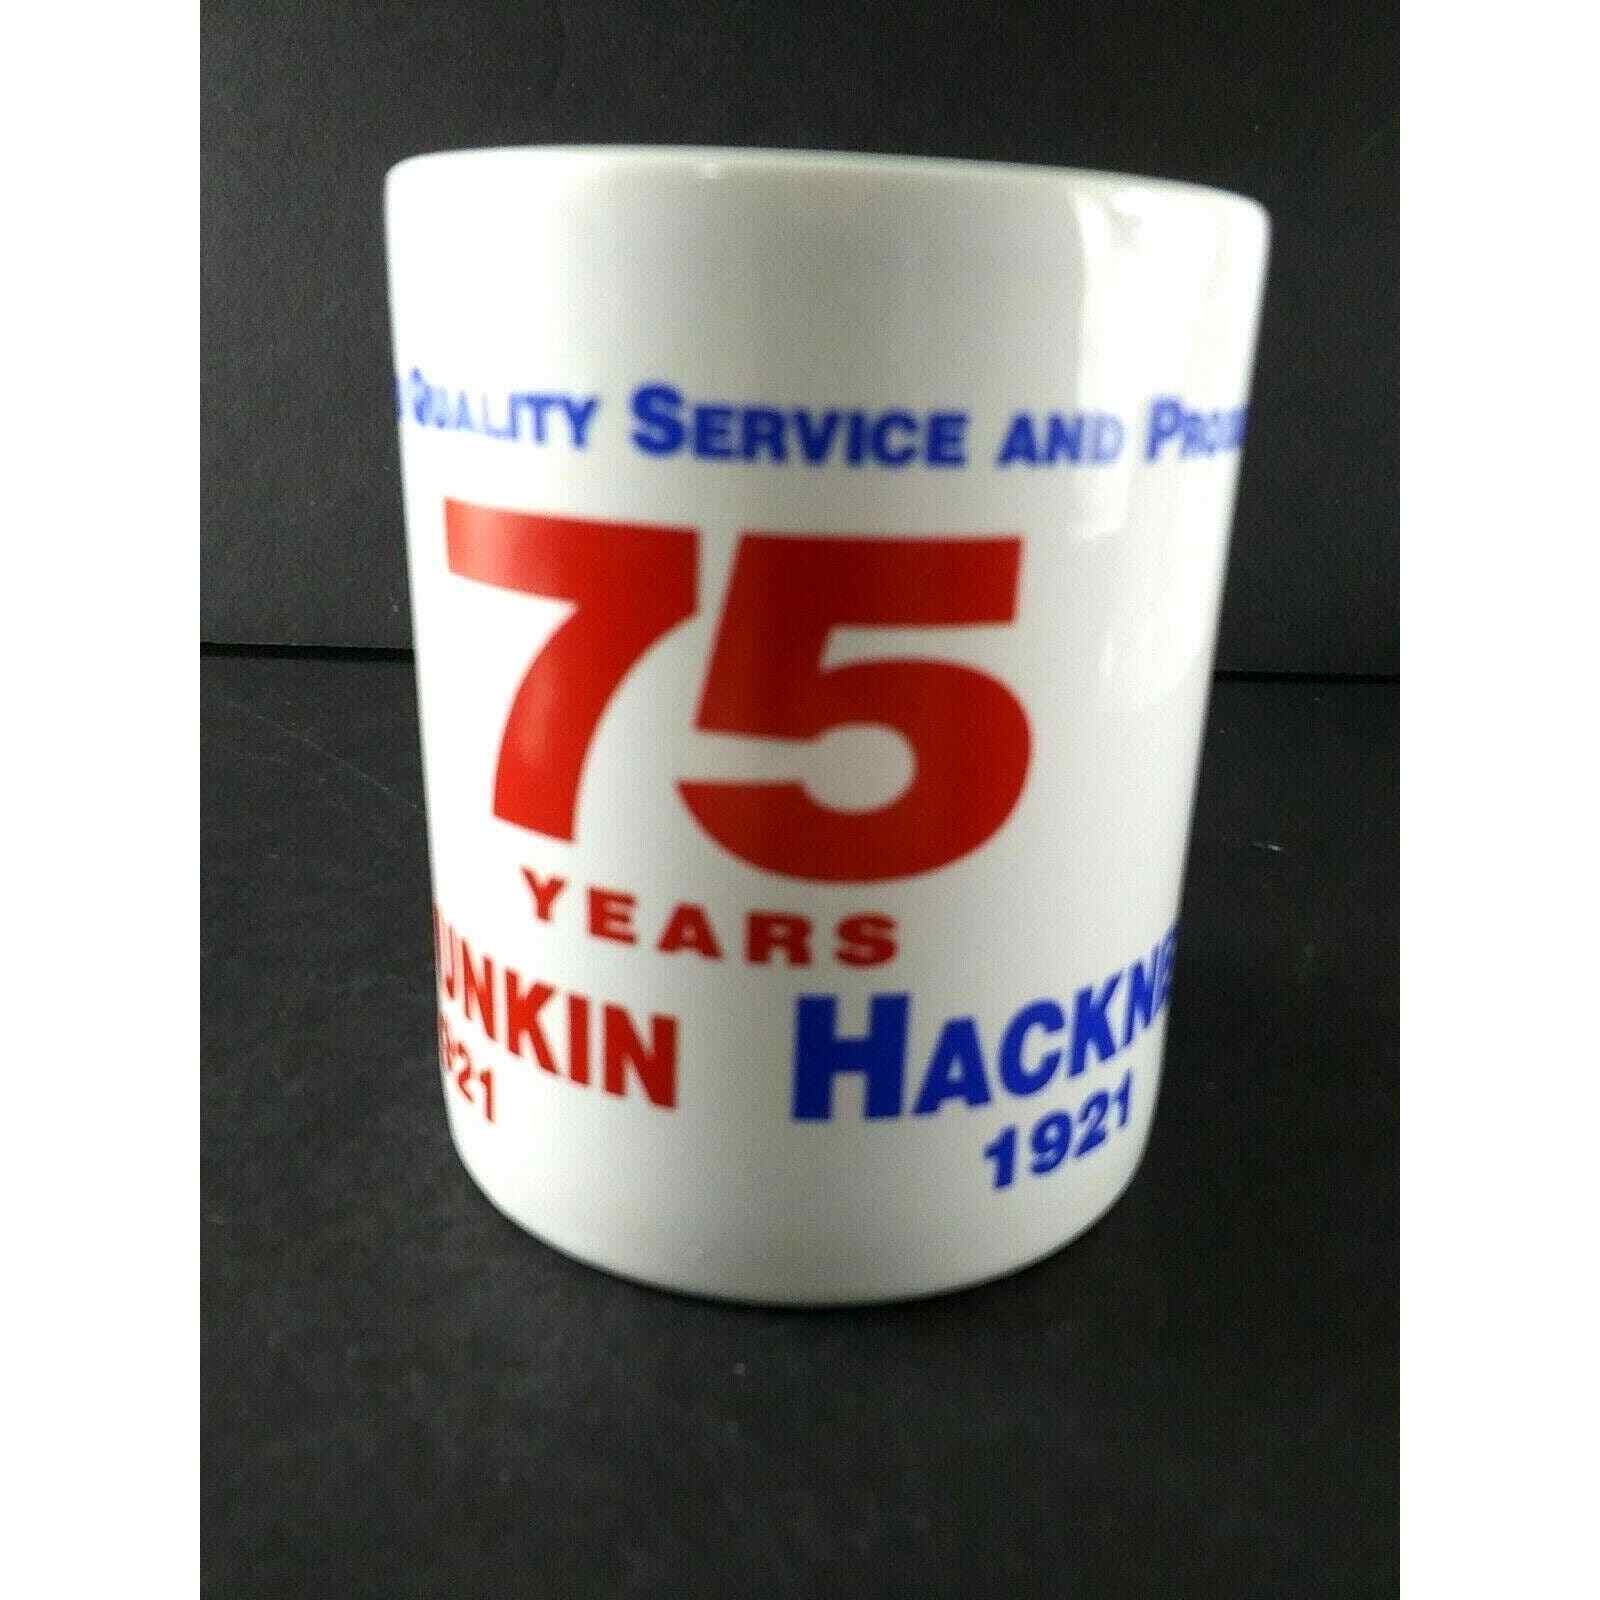 McJunkin & Hackney 75 Years Suppling Quality Service Coffee Cup Mug